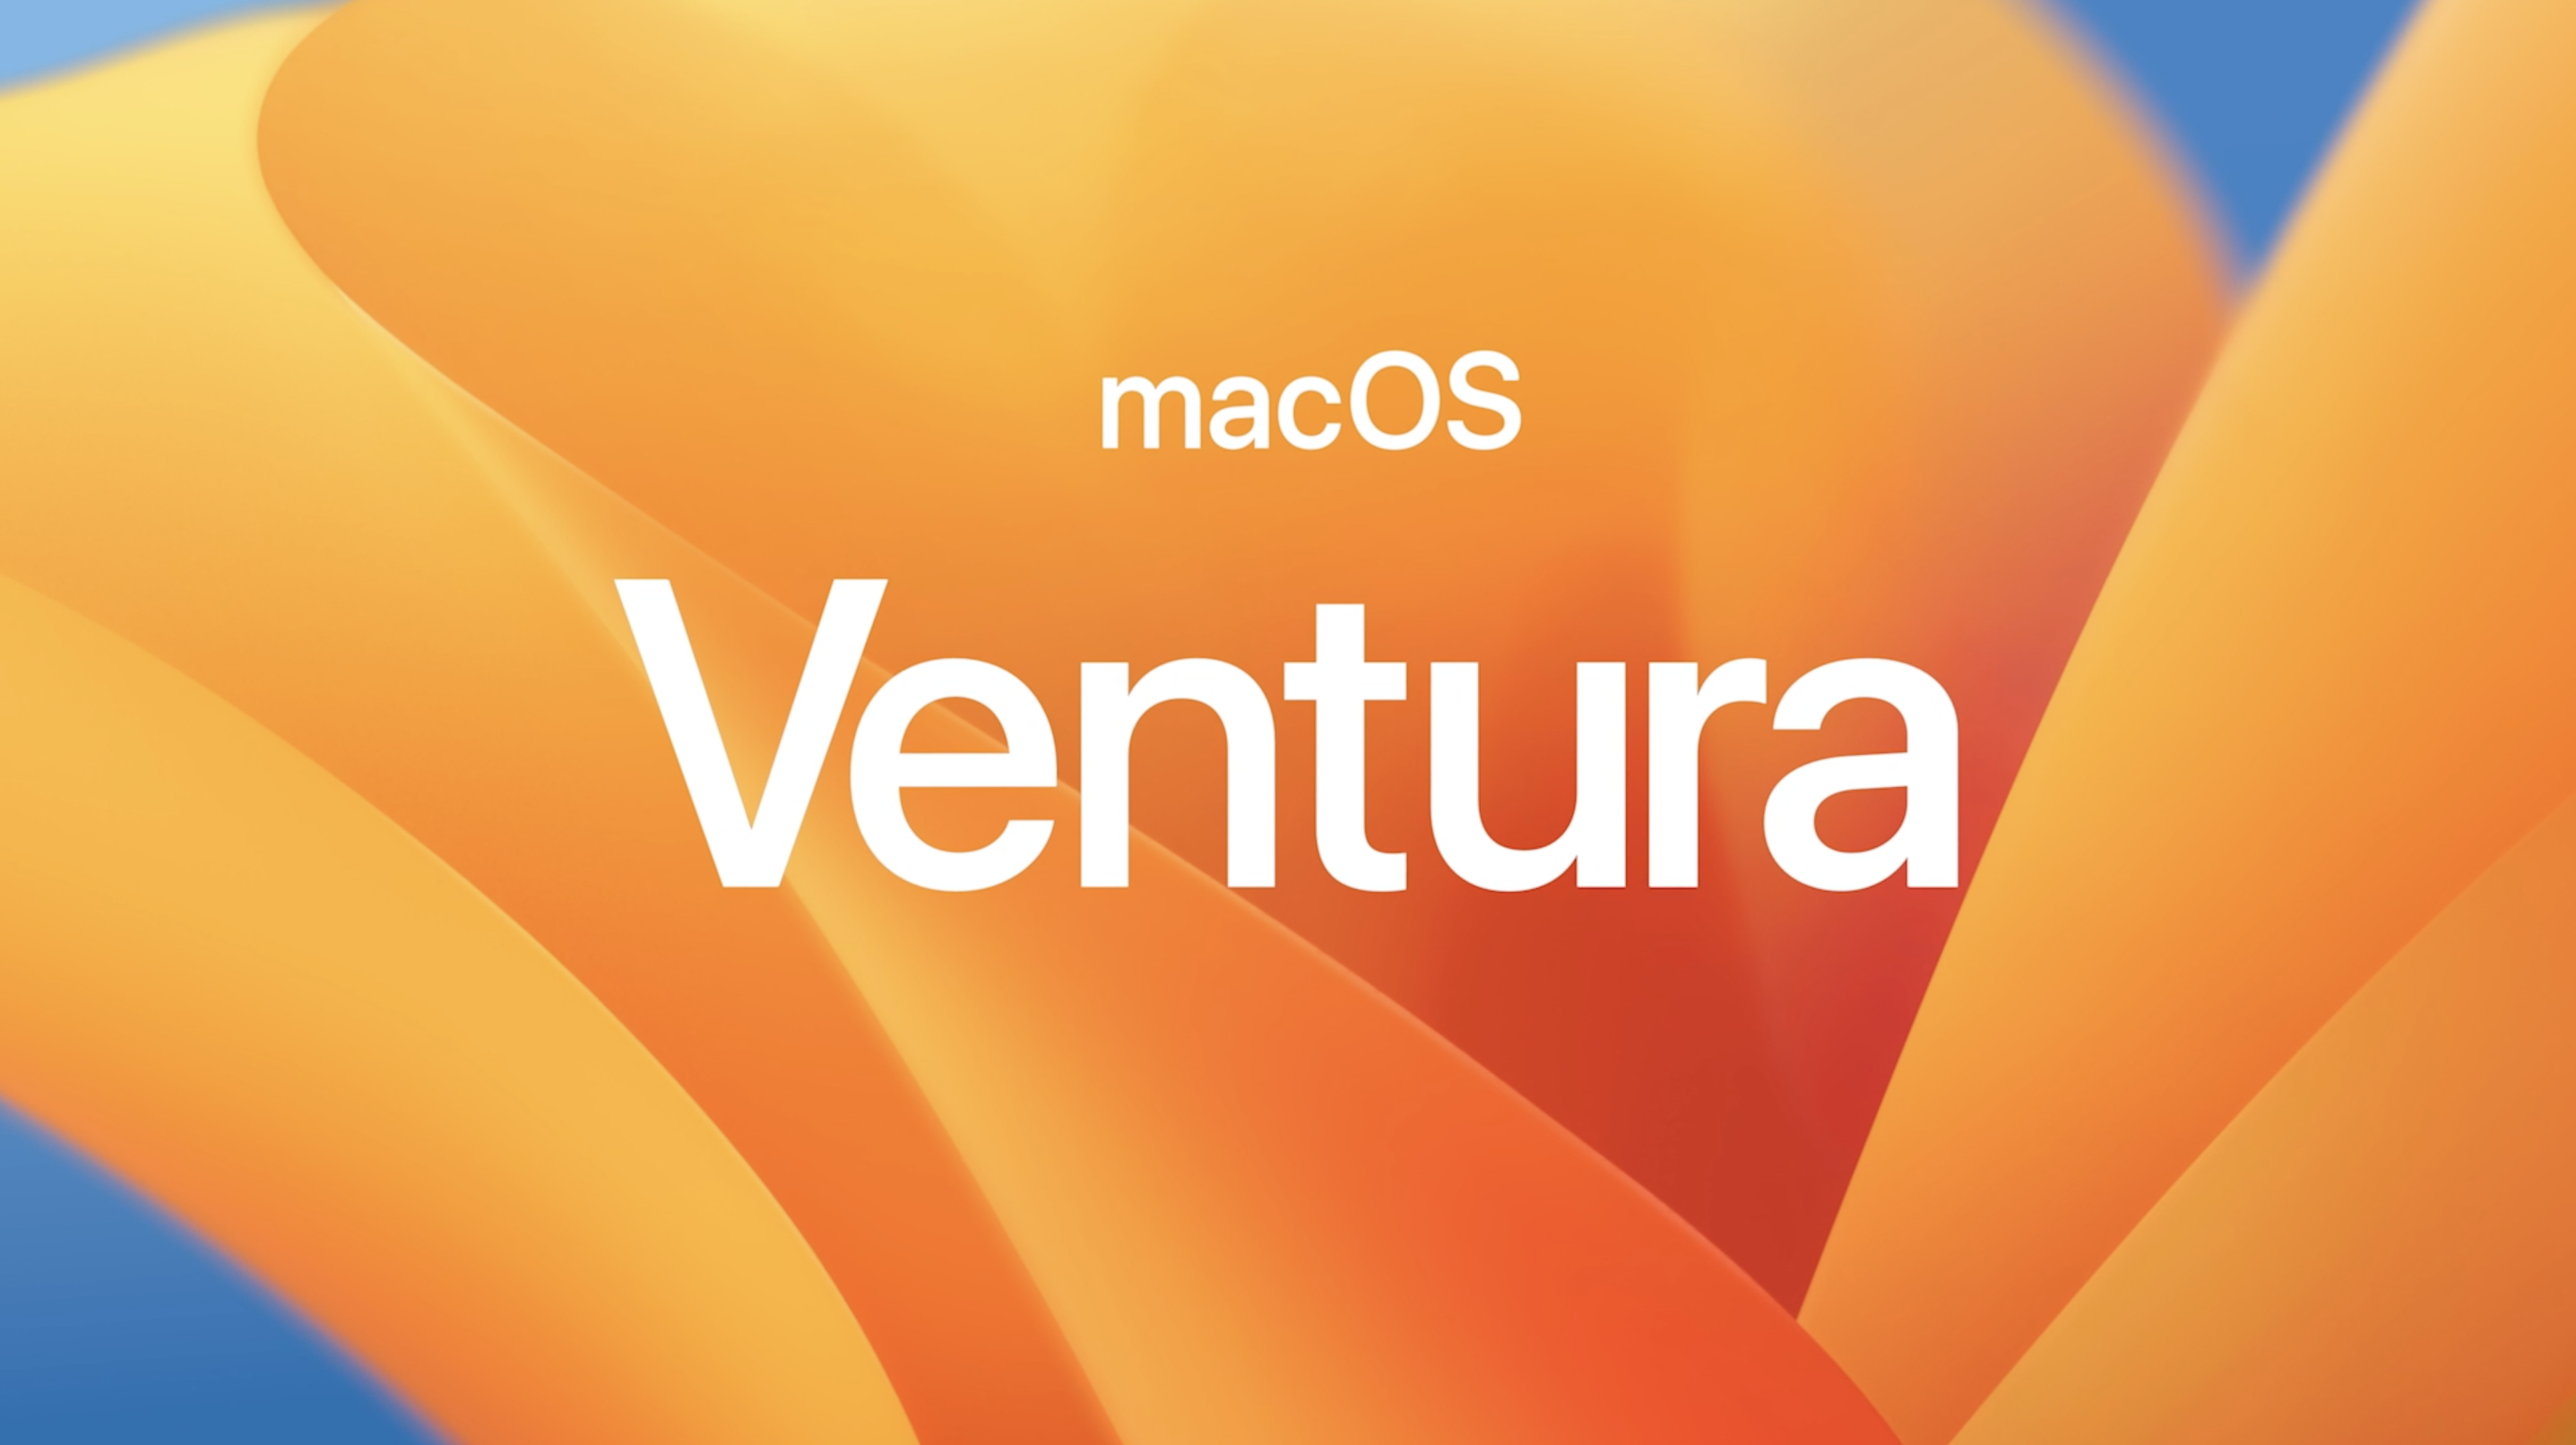 macOS Ventura at WWDC 2022